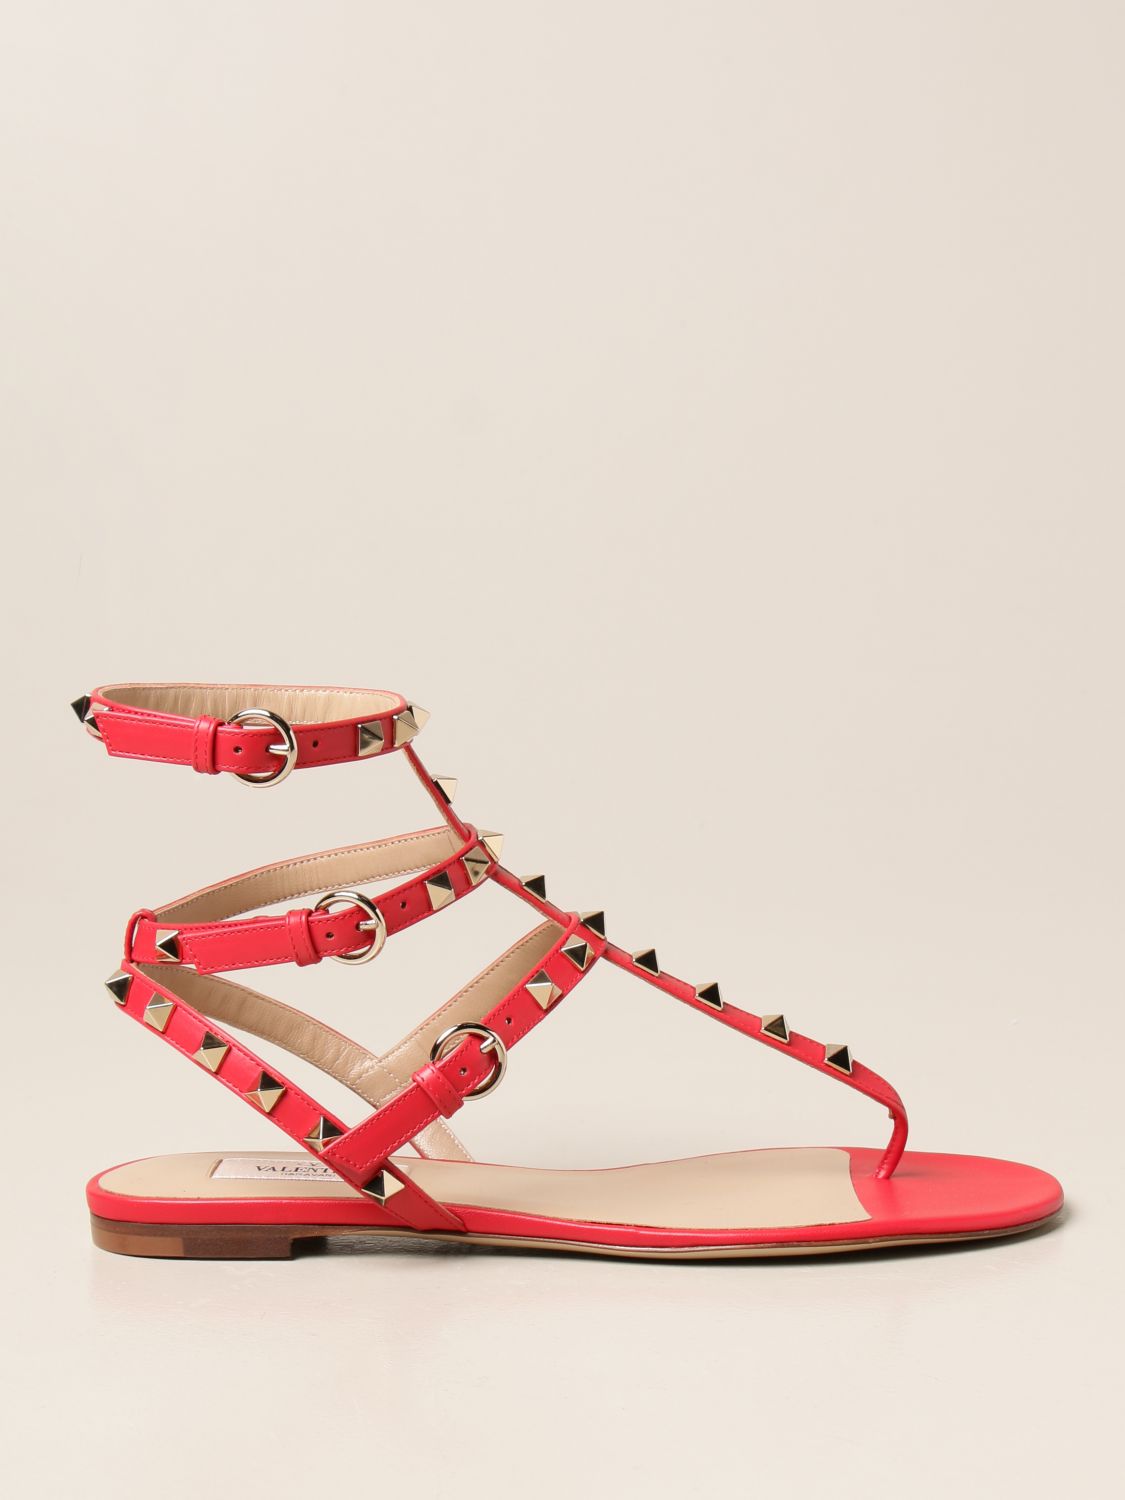 GARAVANI: Rockstud flat sandal in leather - Red | Valentino Garavani flat sandals VW2S0812 VOD online on GIGLIO.COM